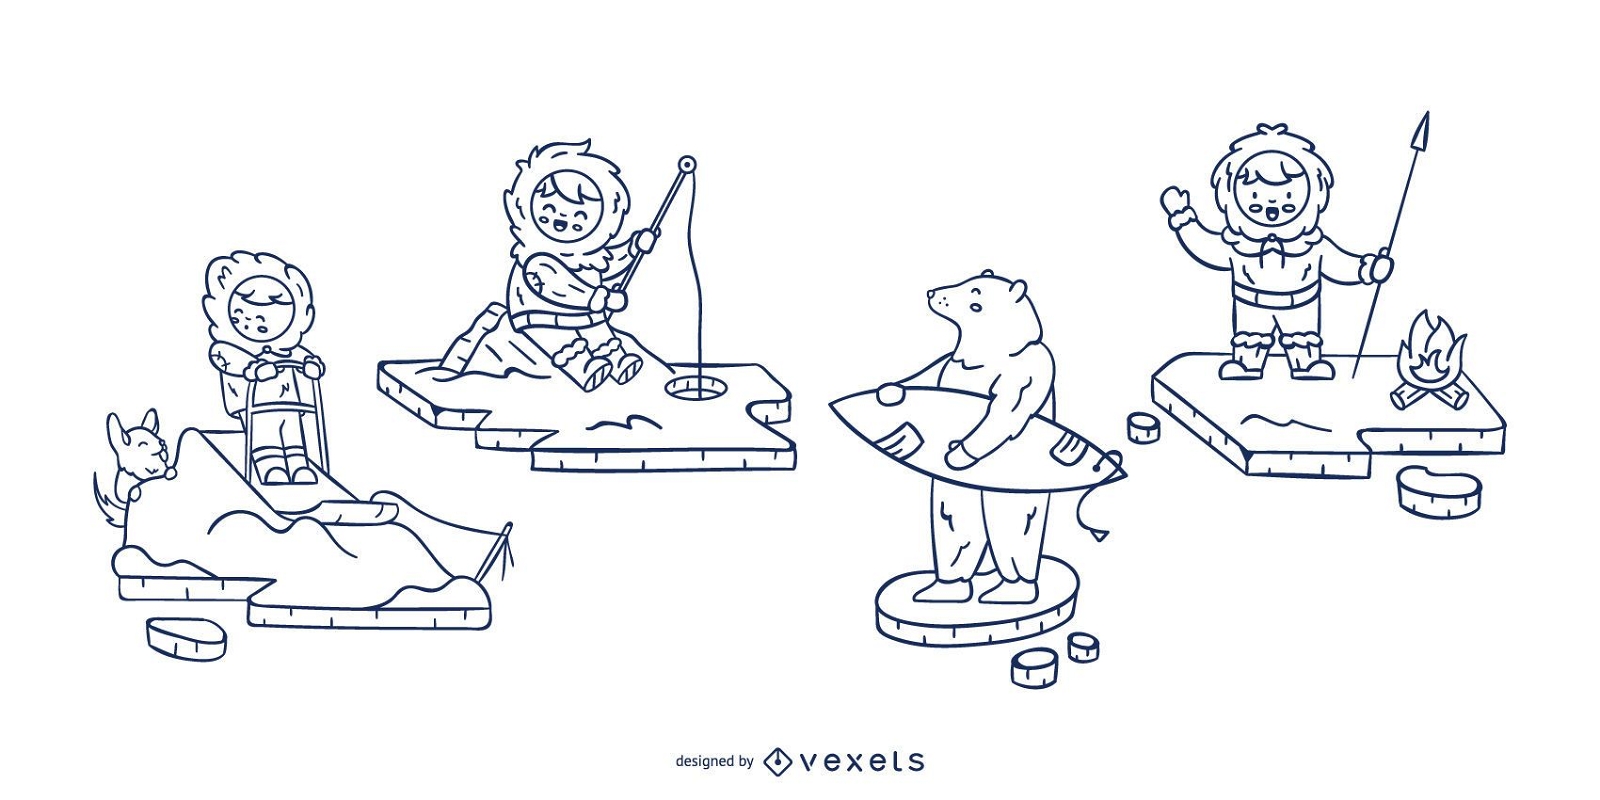 Eskimo characters stroke set